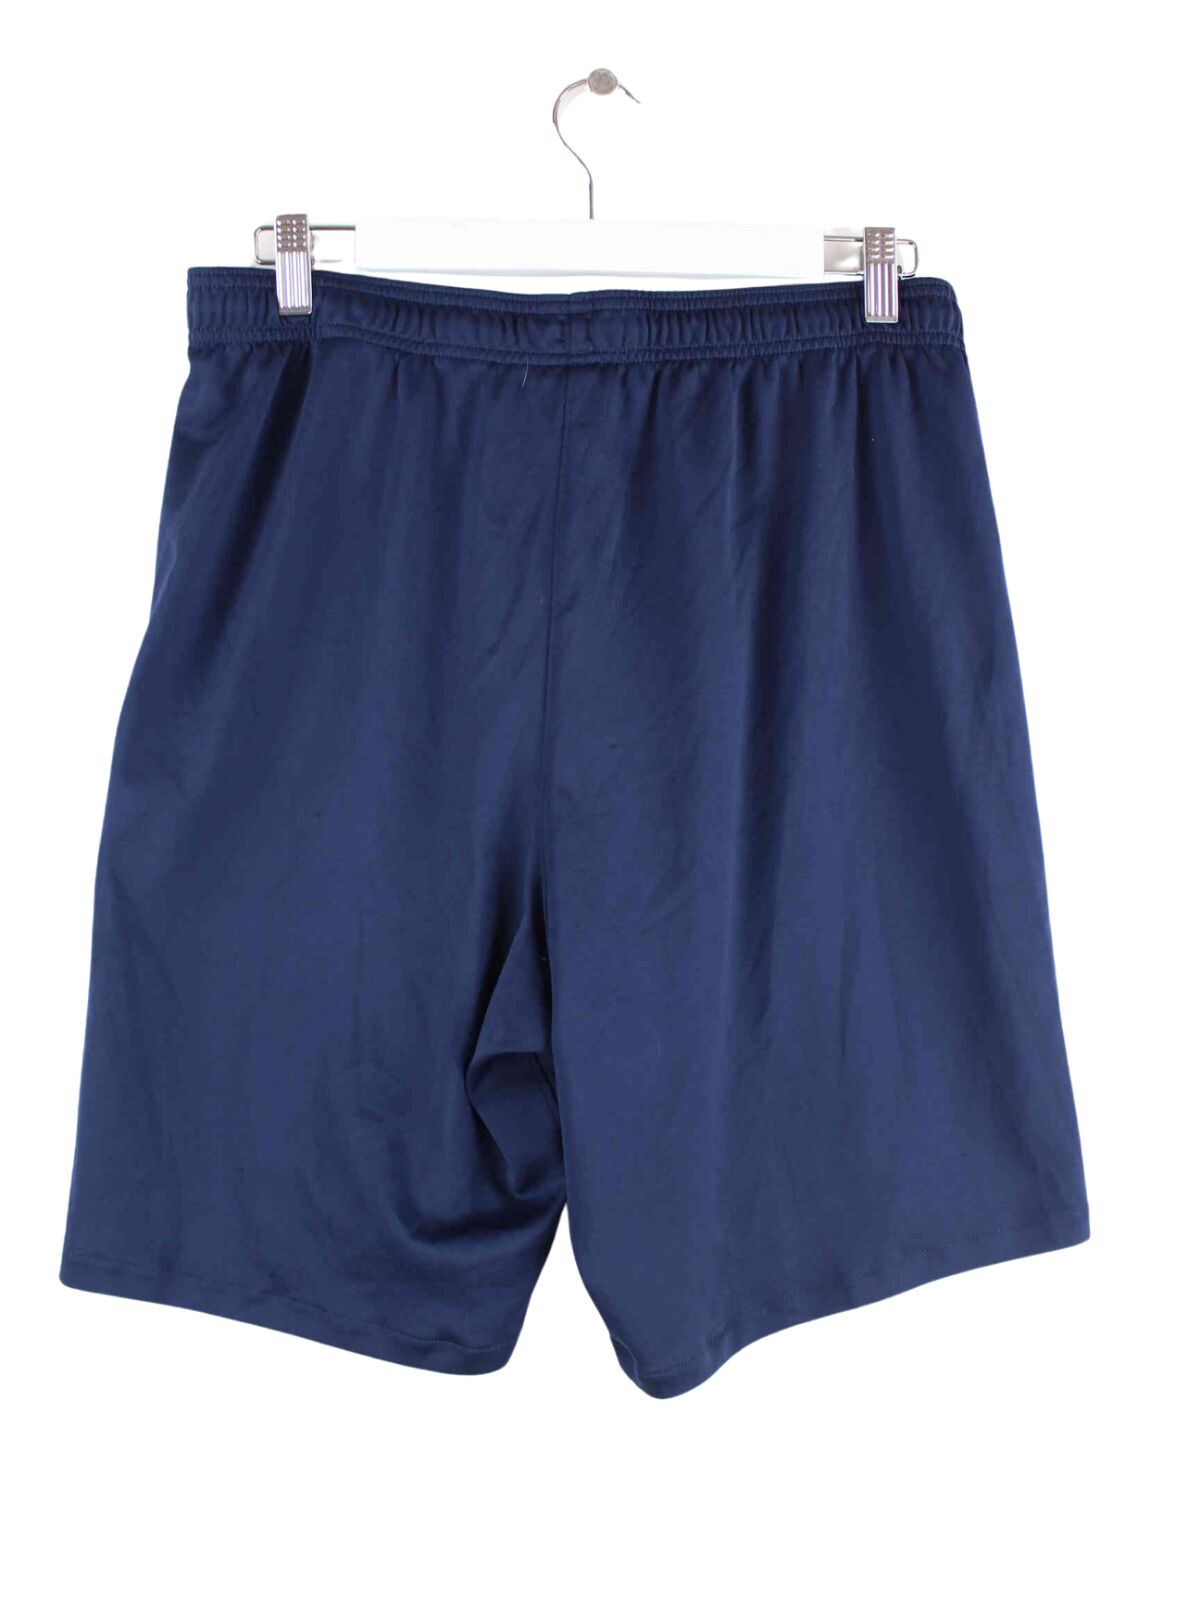 Nike Swoosh Shorts Blau L (back image)